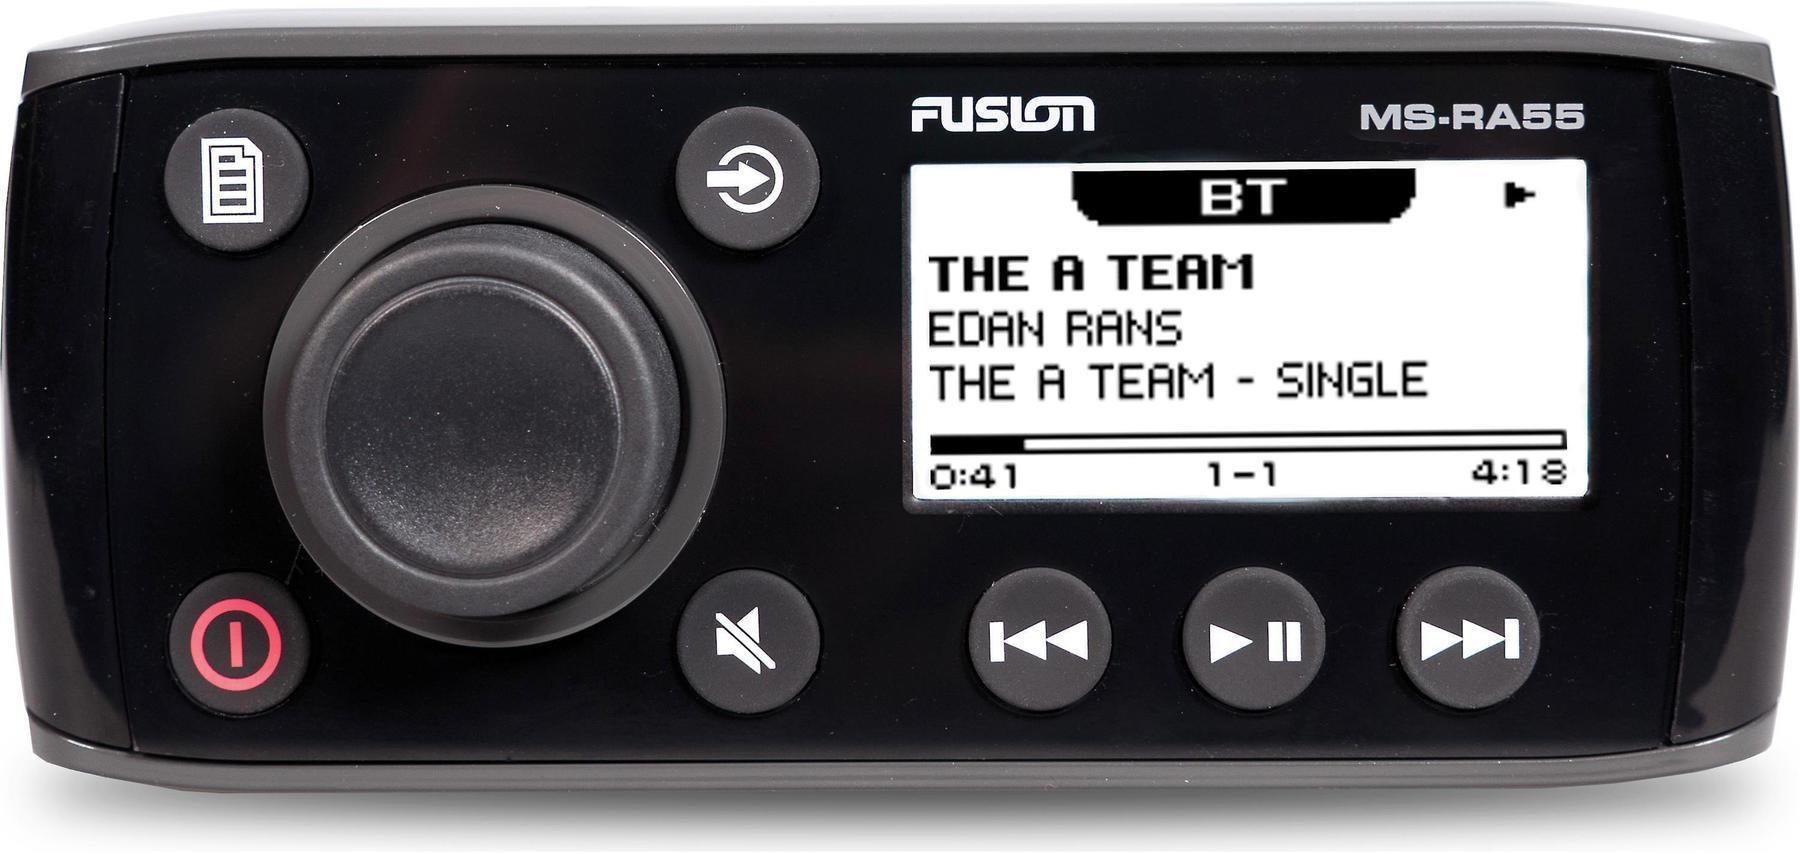 Audio / Video Fusion MS-RA55 - AM/FM Radio with Bluetooth modul